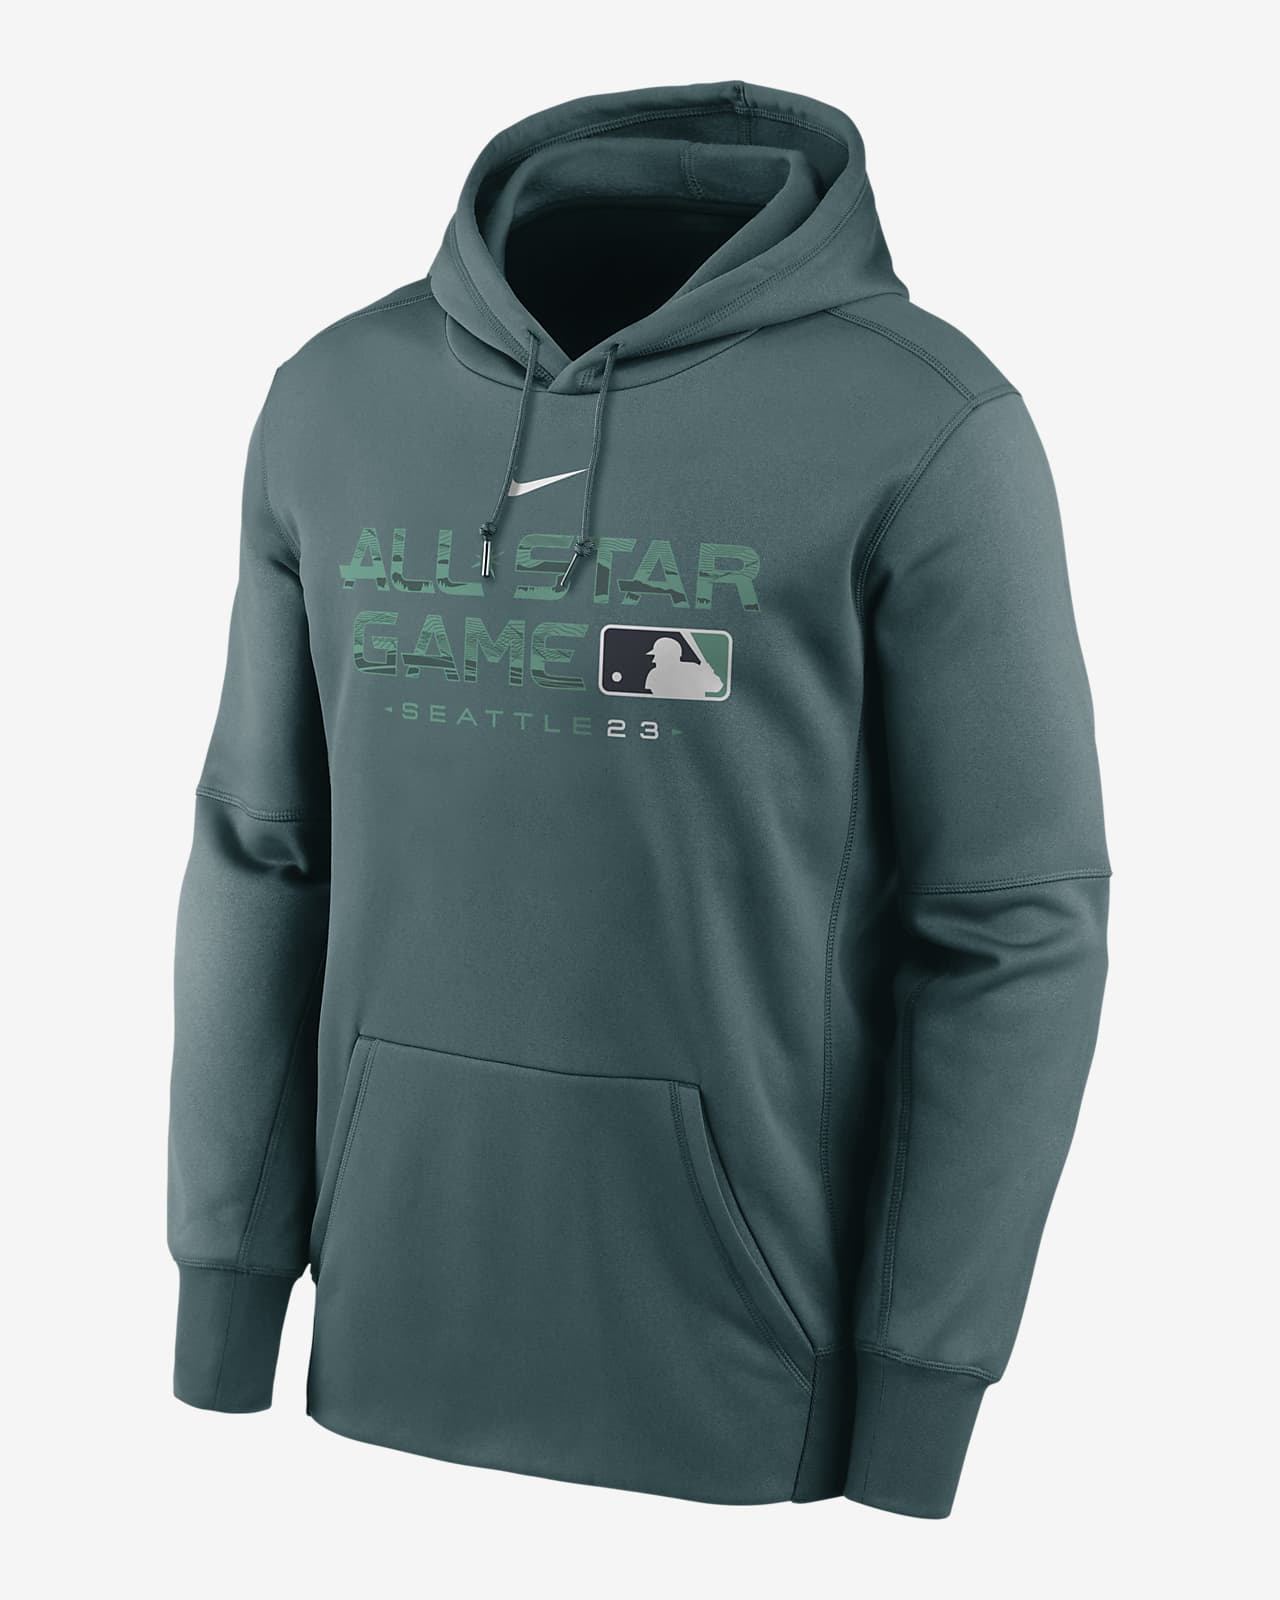 MLB Men's Nike Boston Red Sox Pullover Hoodie - Green/Grey